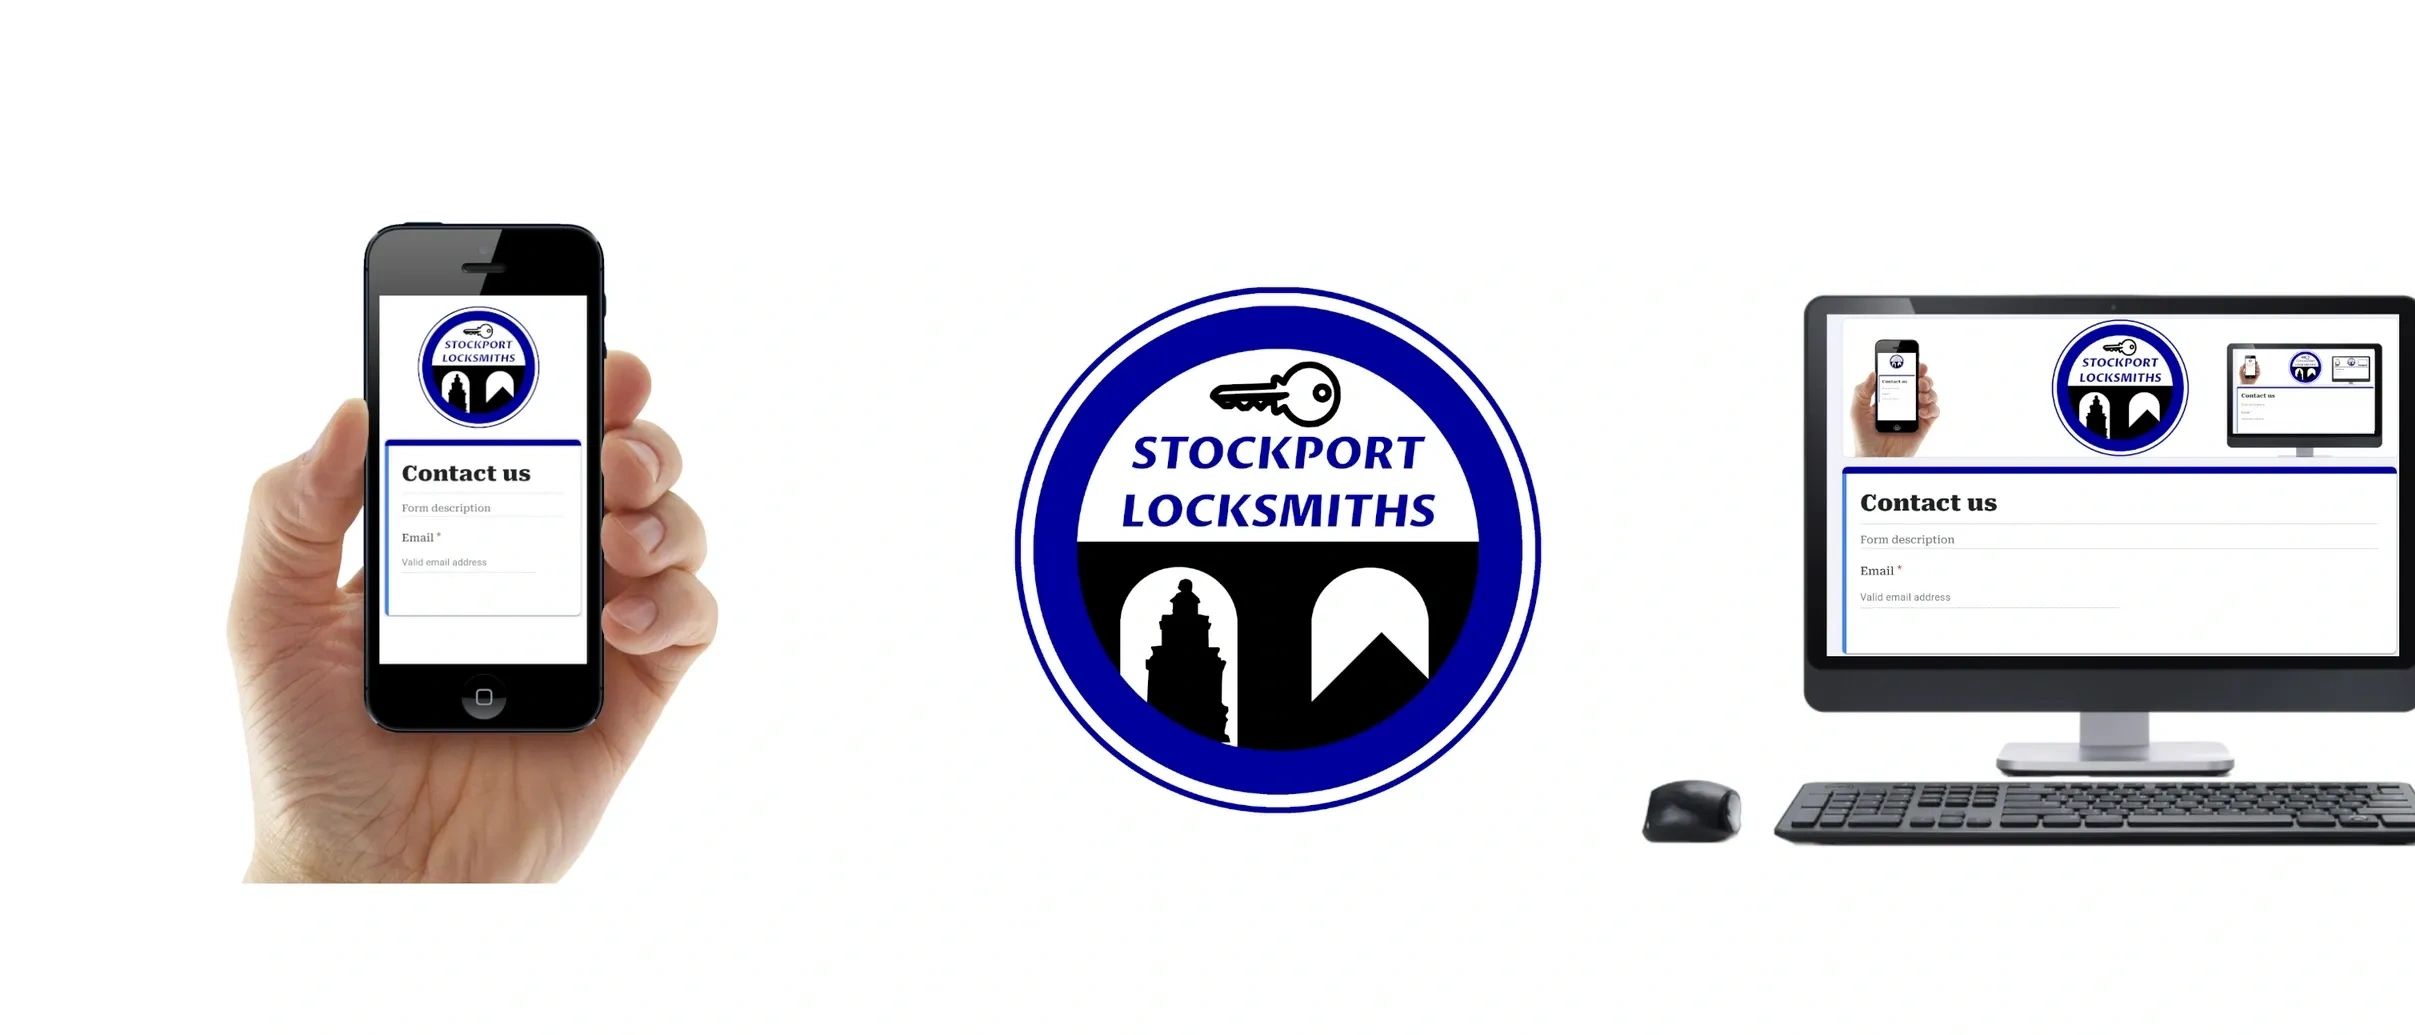 Contact Stockport Locksmiths